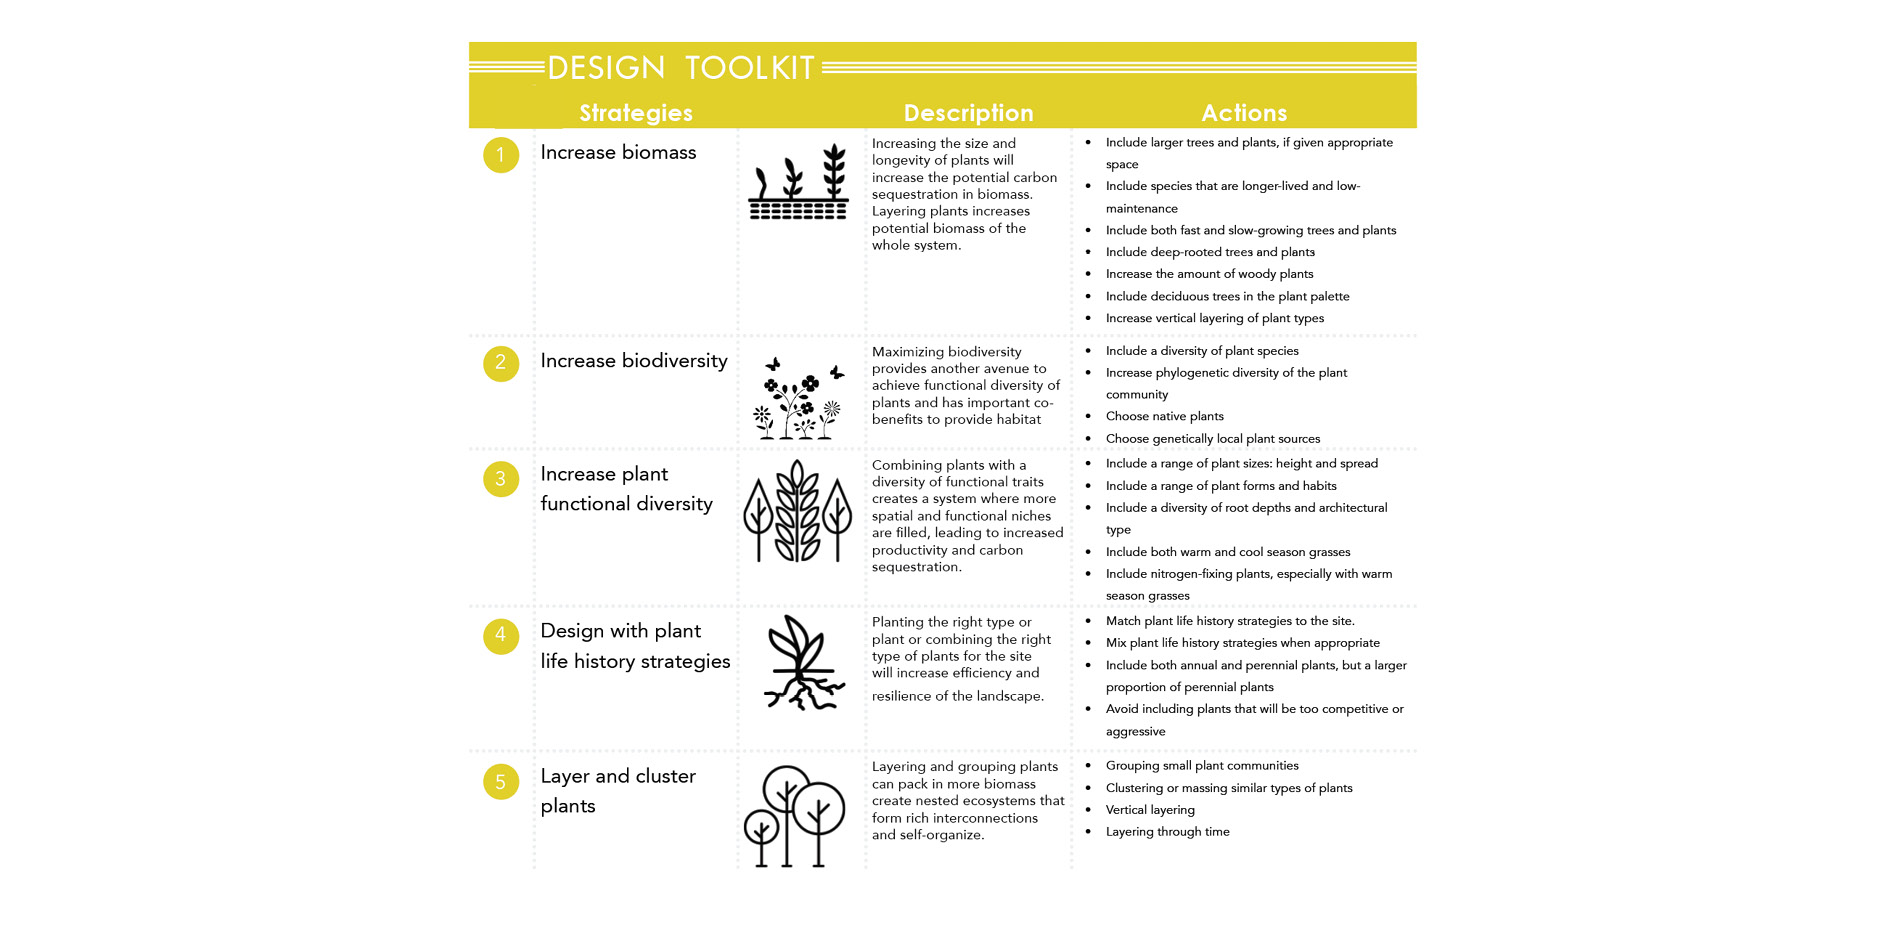 Design Toolkit